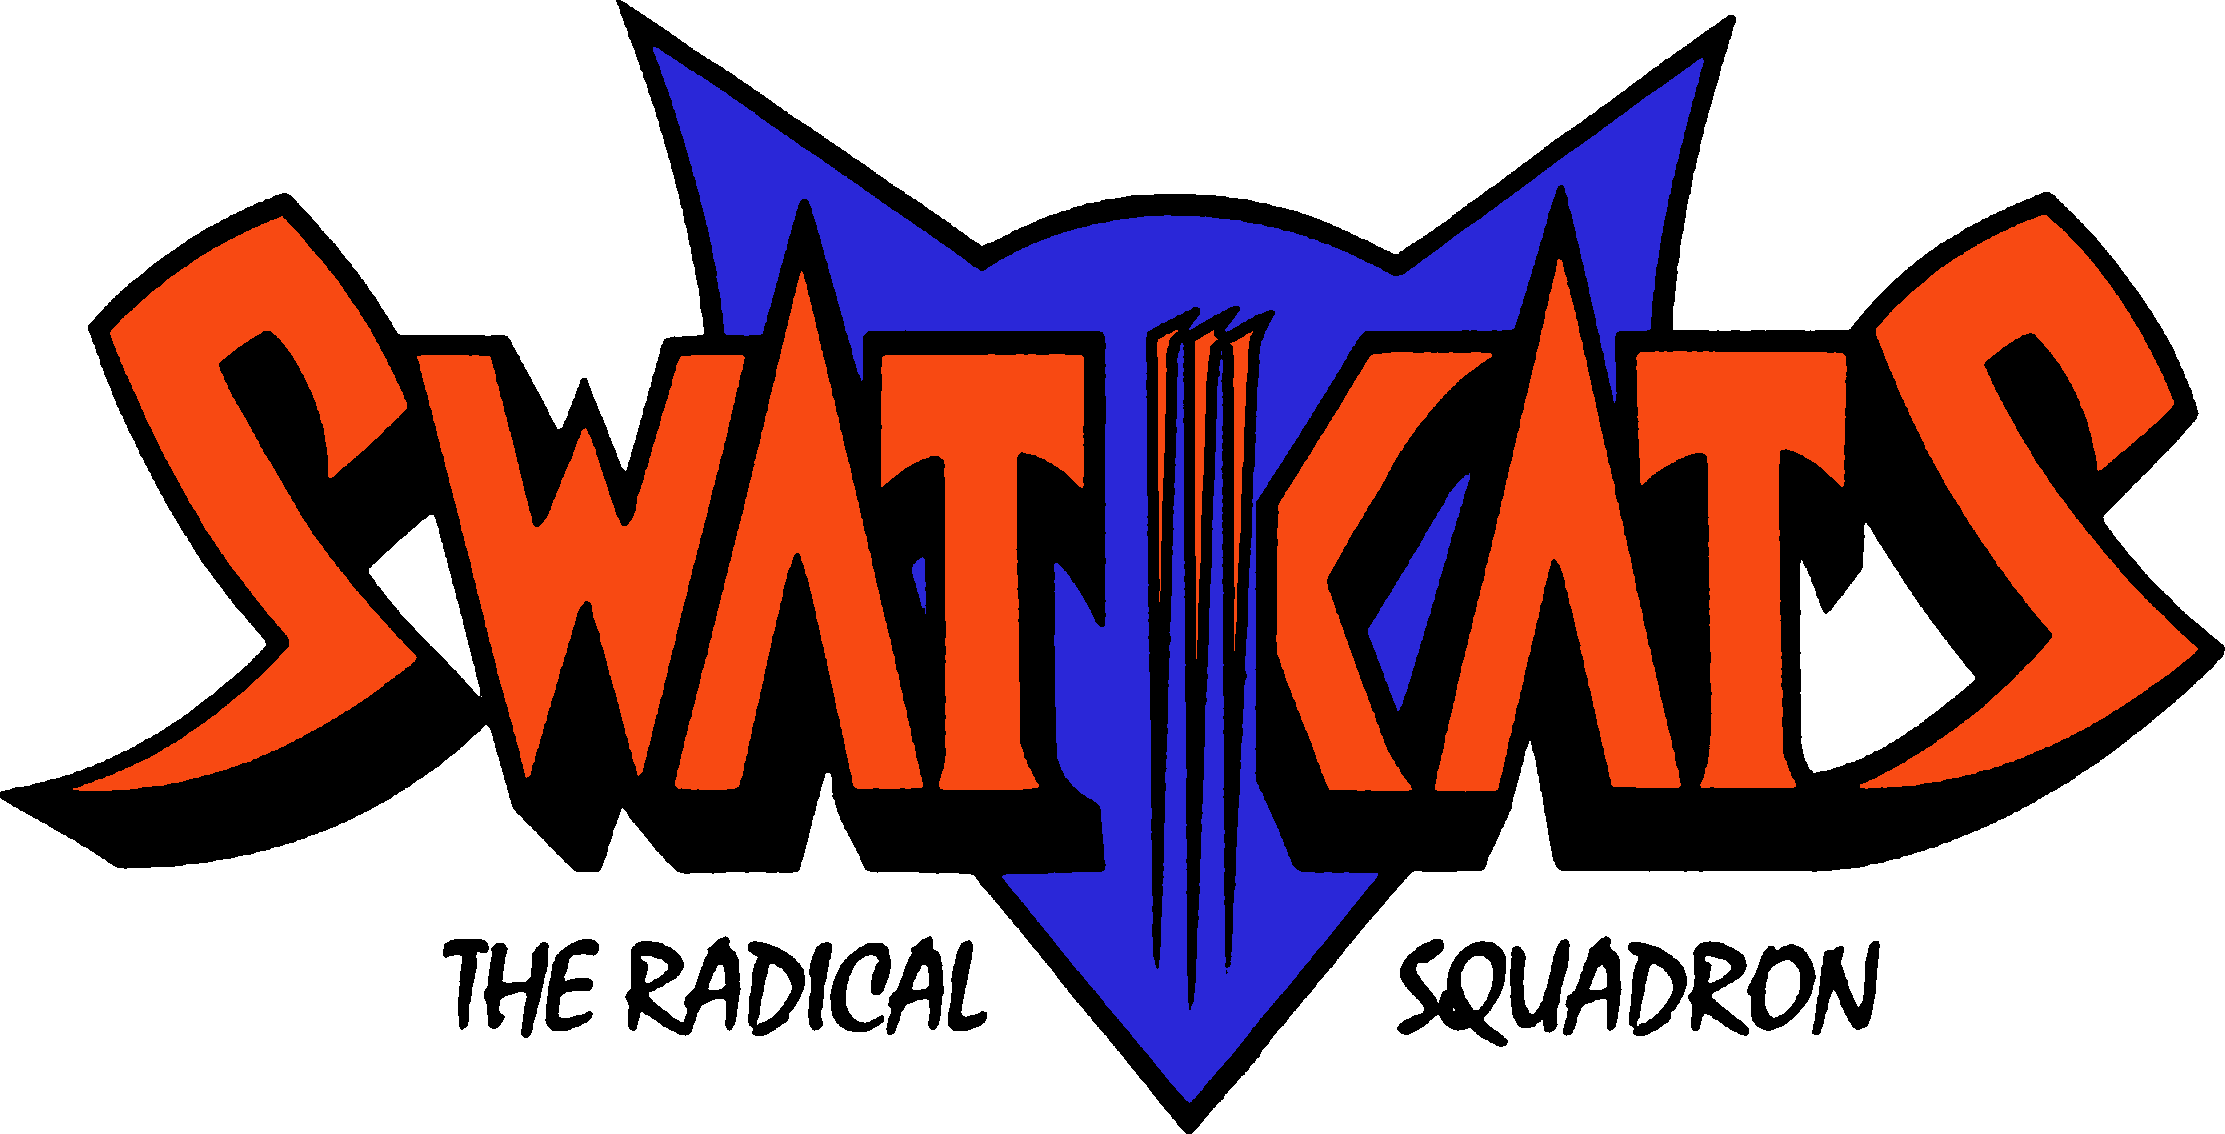 SWAT Kats: The Radical | Warner Entertainment Wiki | Fandom